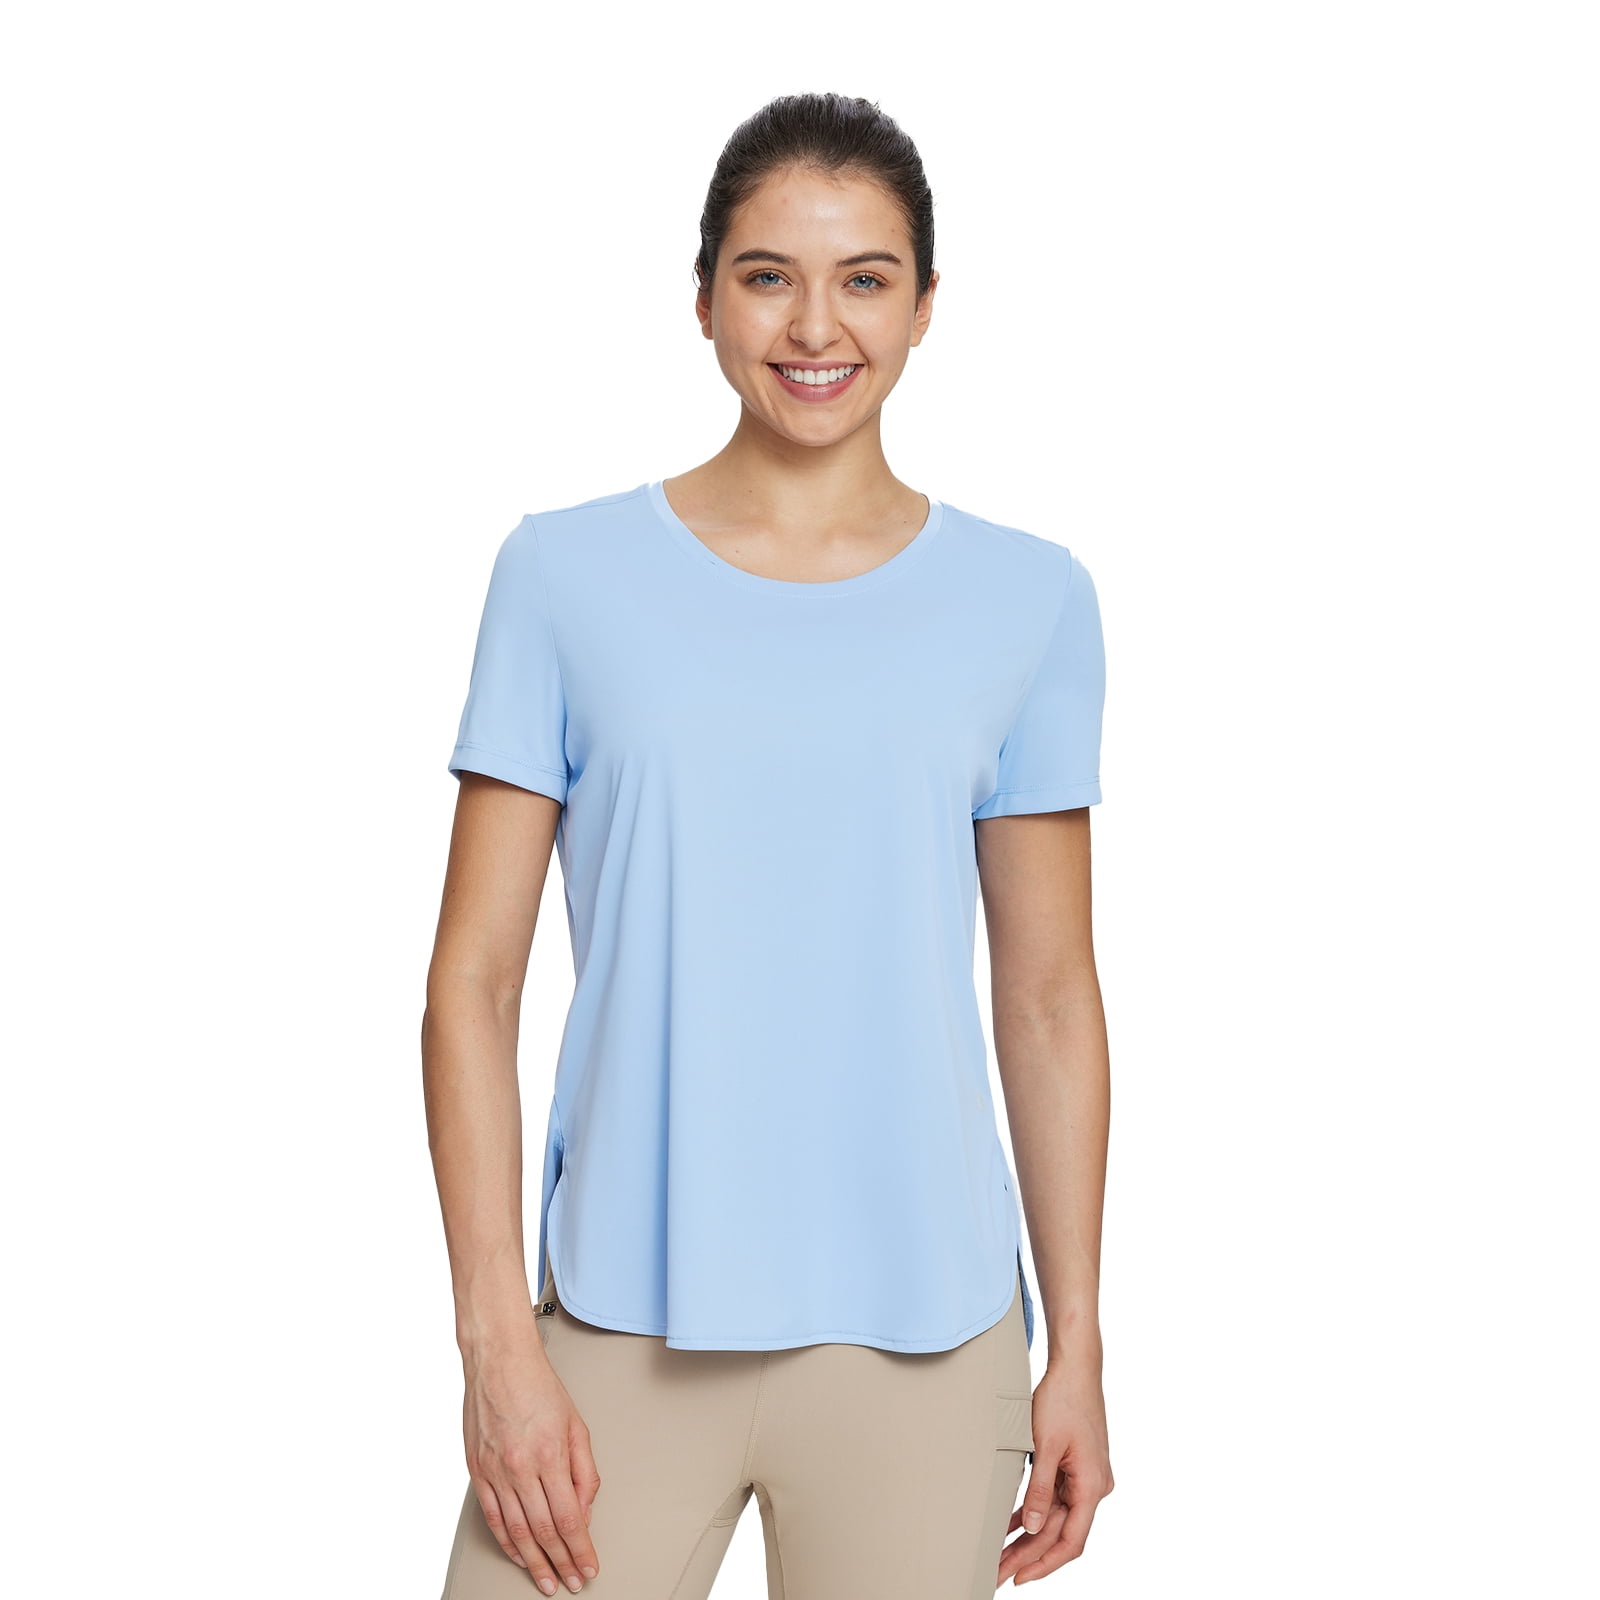 Reel Life Women's Alaria Cloud Dye UV T-Shirt - Dusty Blue